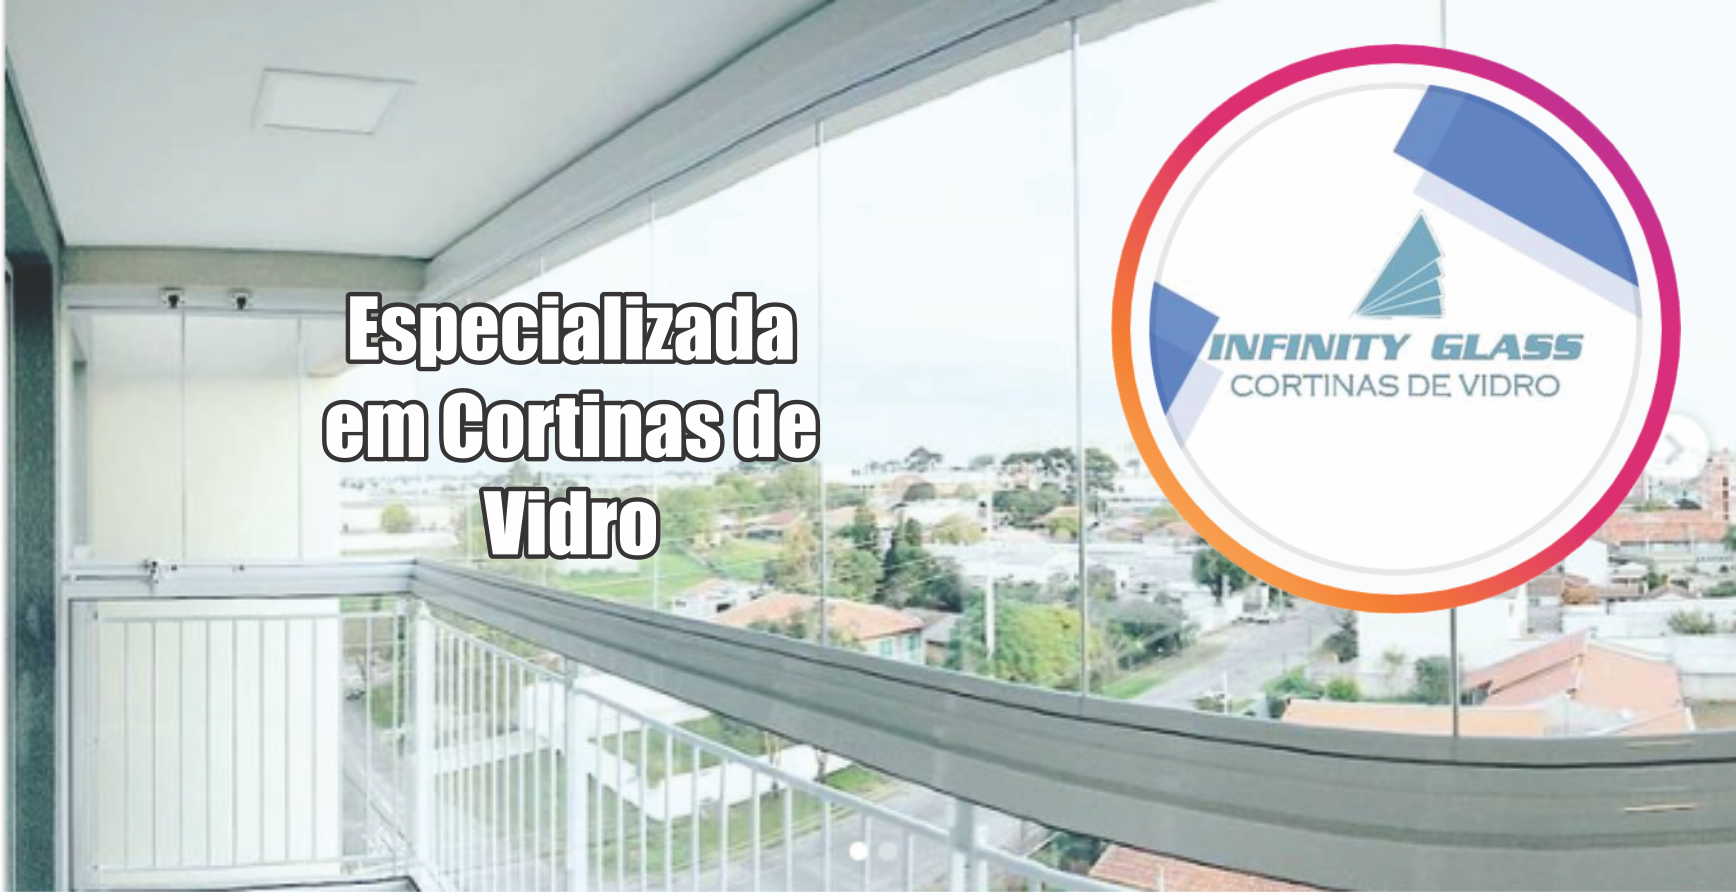 InfinityGlass Cortinas de Vidro      Fones: (41) 99118-4772 / (41) 92002-5110